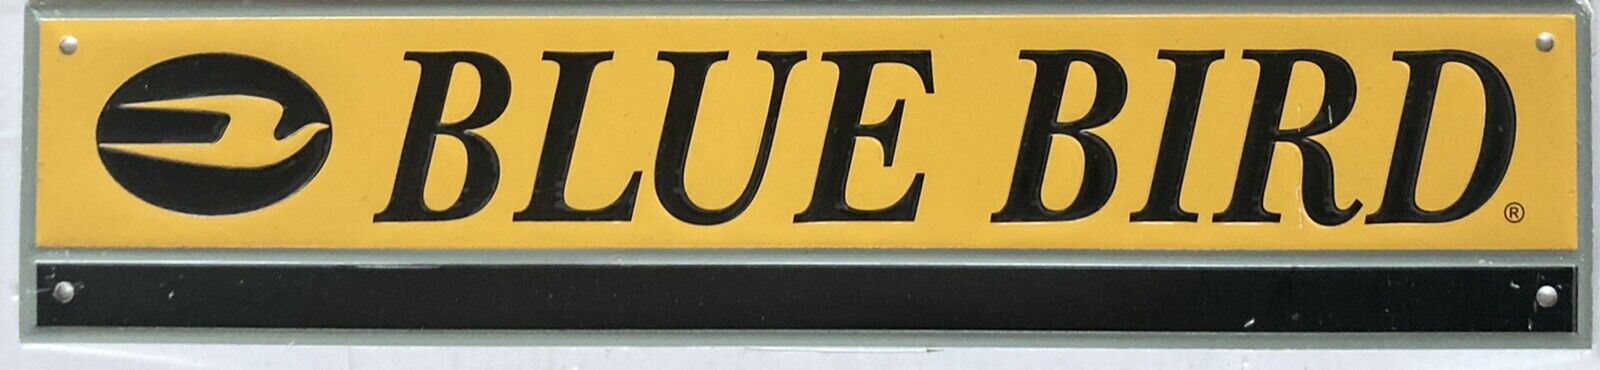 New - Blue Bird School Bus Metal Emblem Sign w/ Adhesive Backing 15